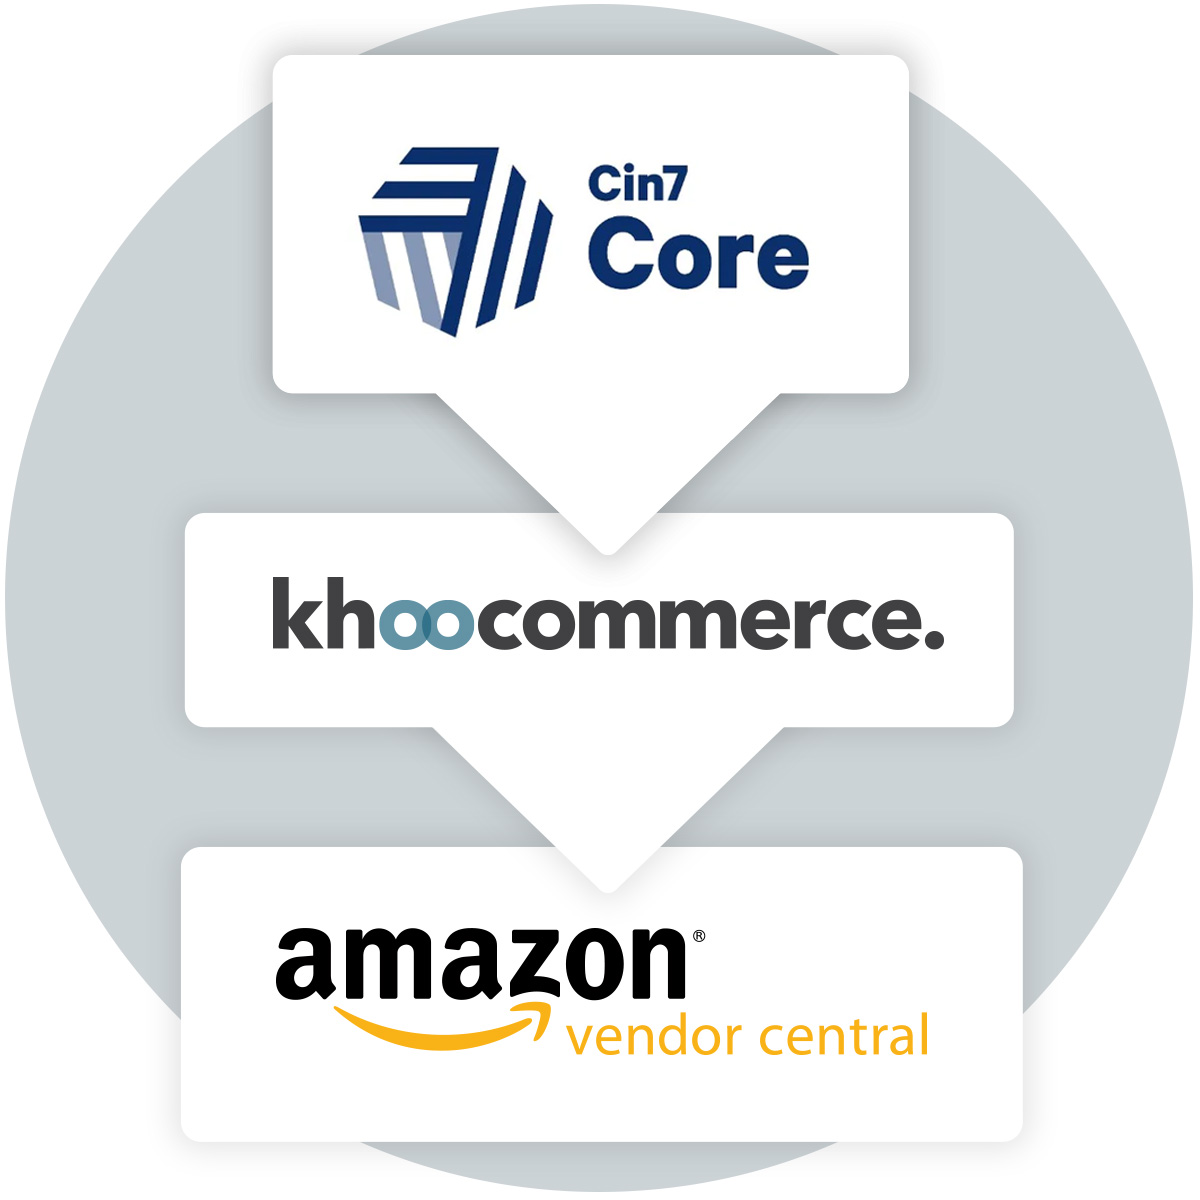 Cin7 Connection through KhooCommerce to Amazon Vendor